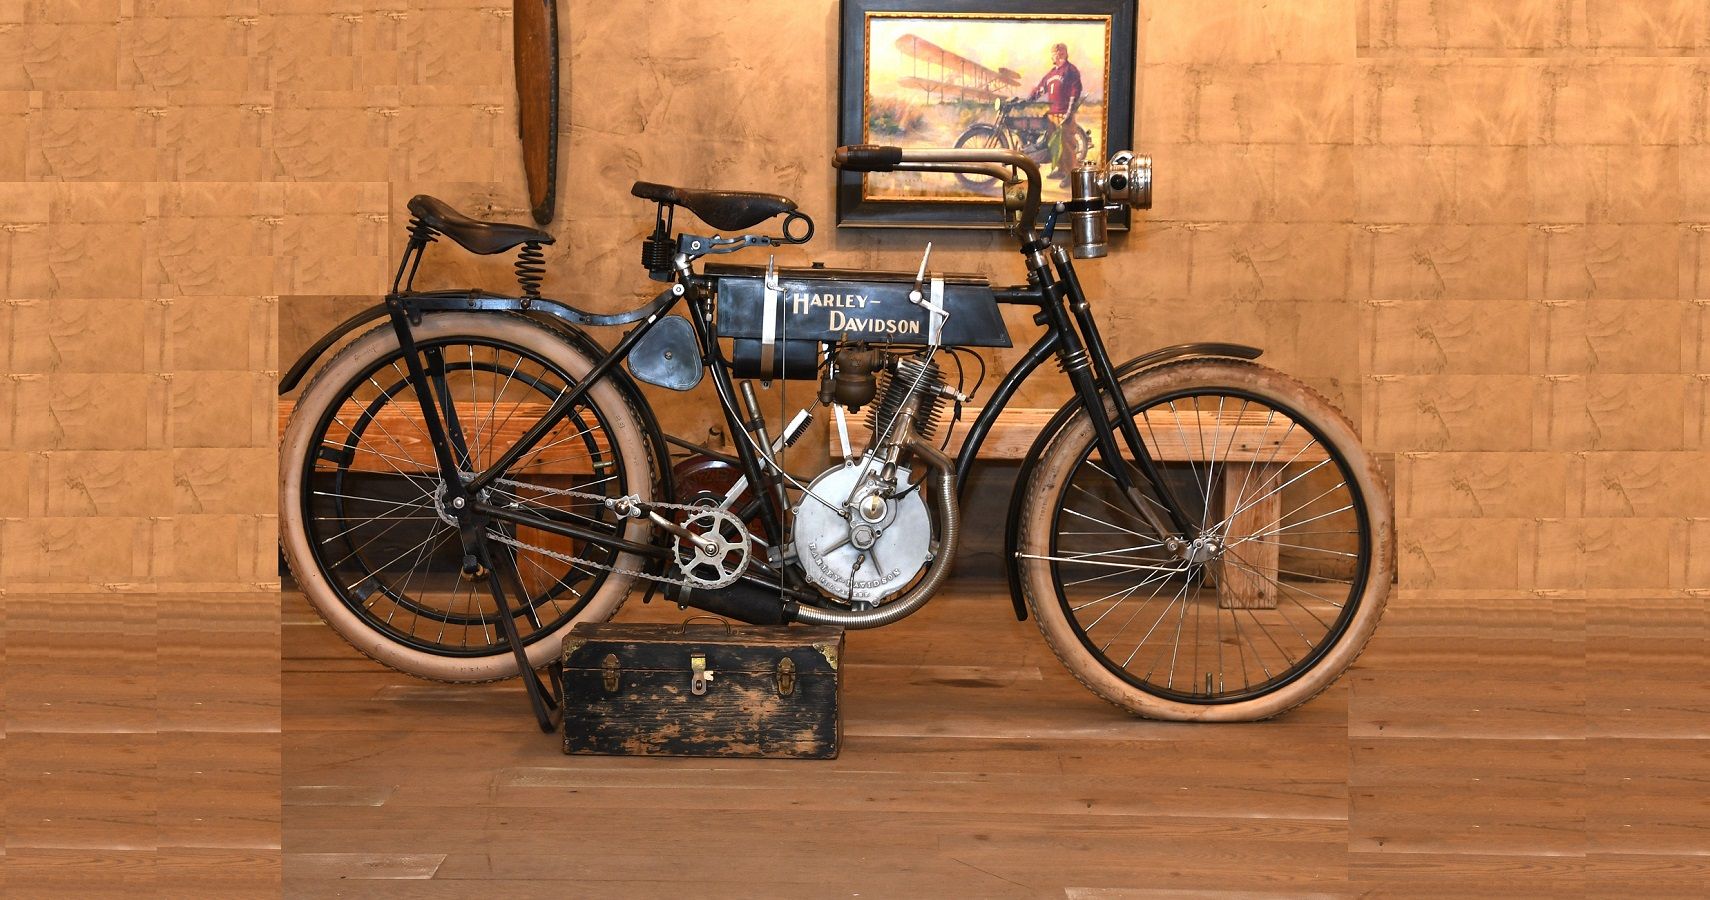 Harley-Davidson First Production Bike On Display